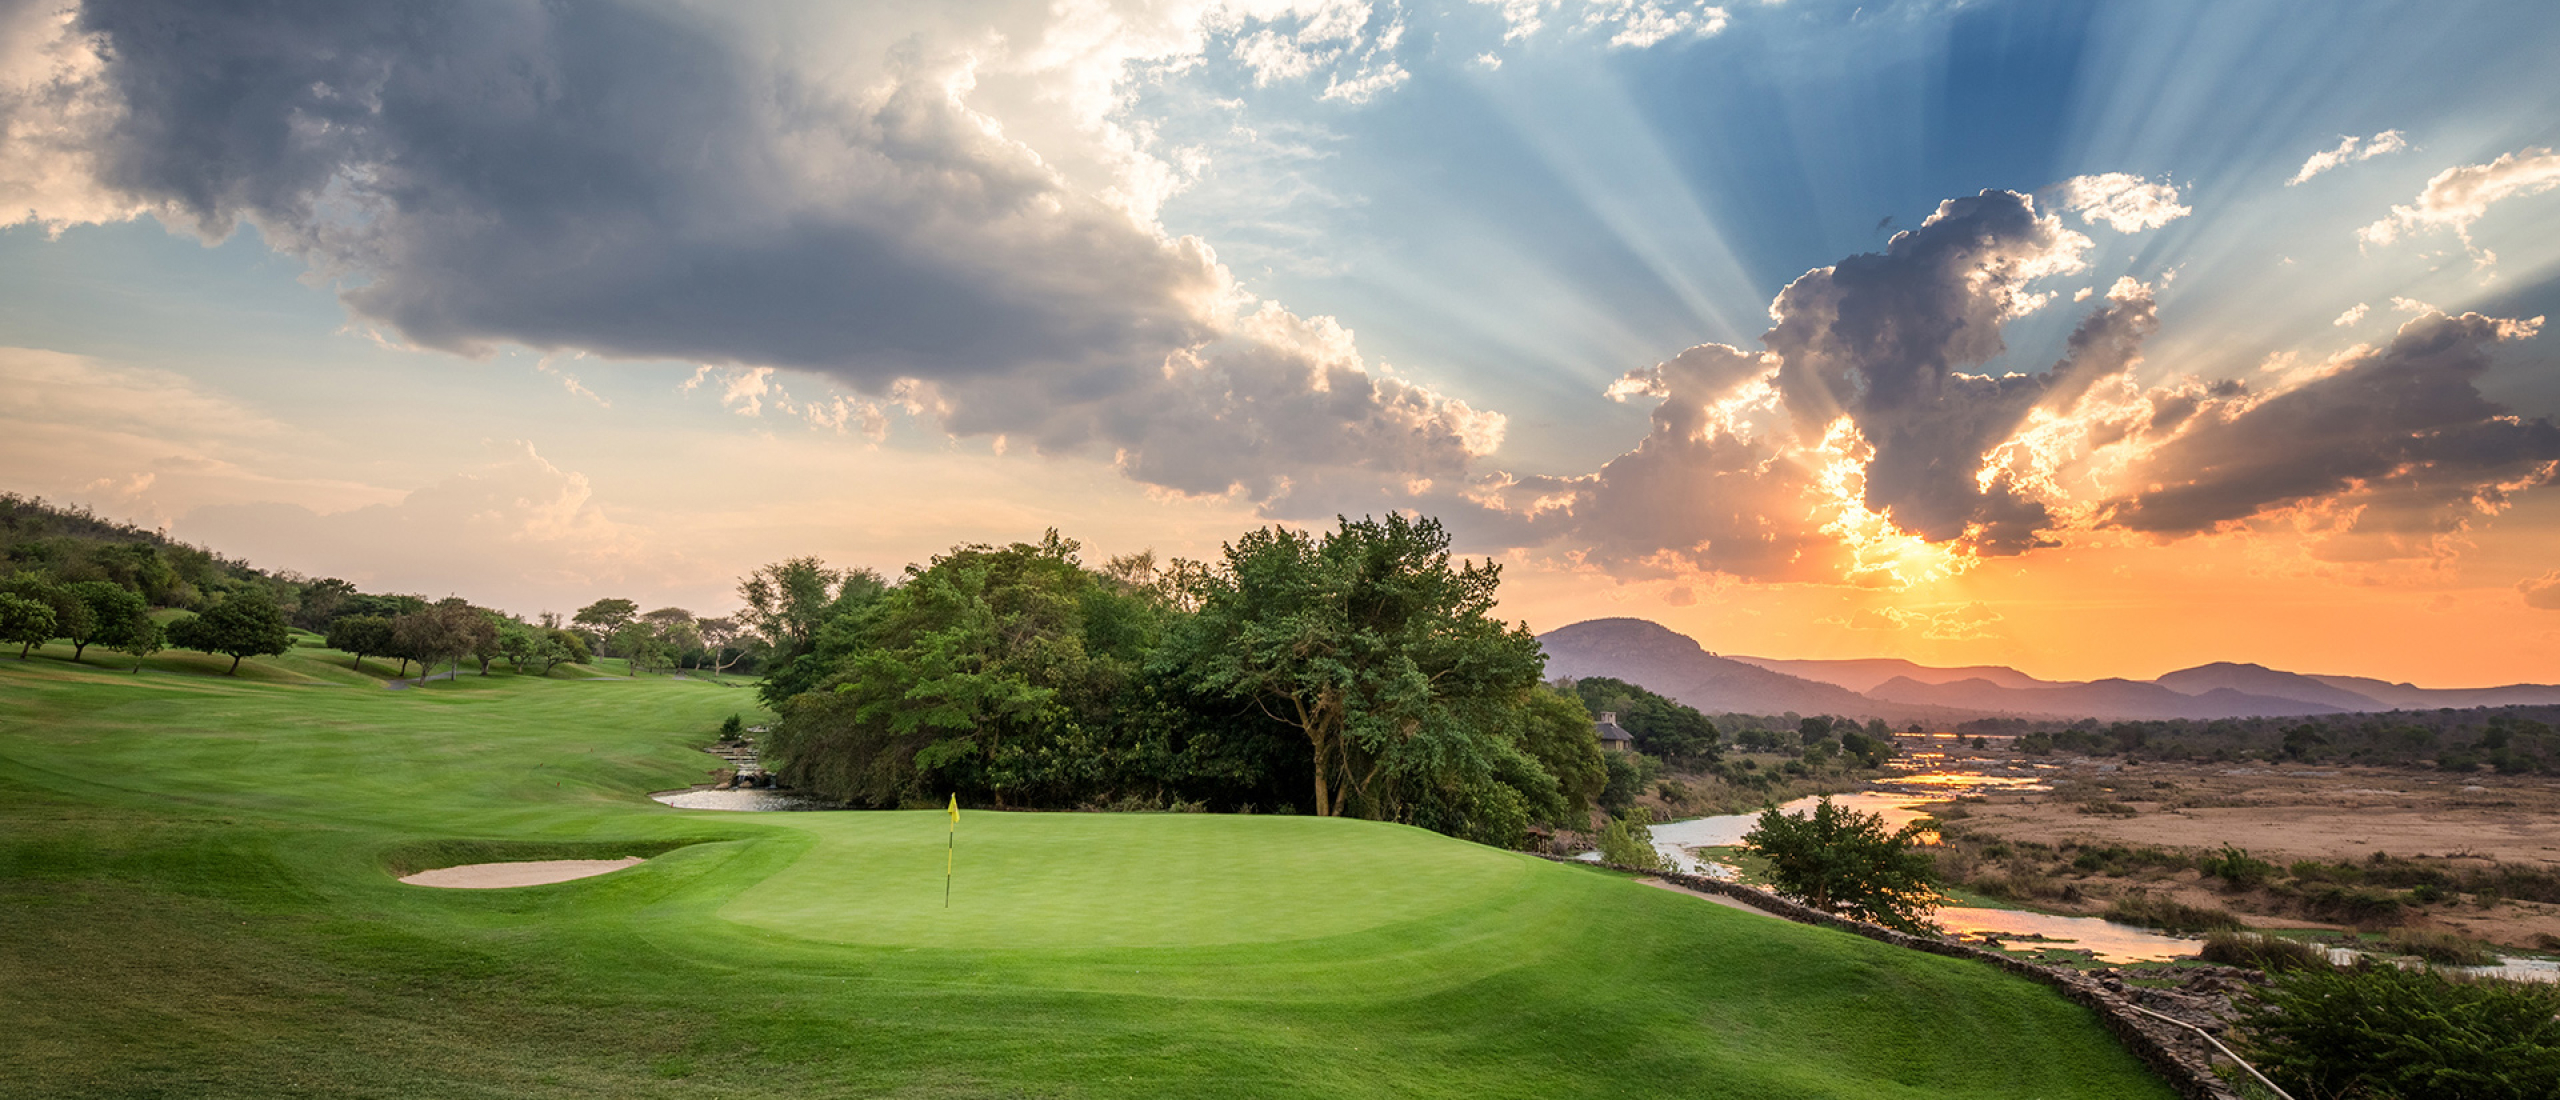 Top 5 Golfcourses Zuid-Afrika 2017-2018